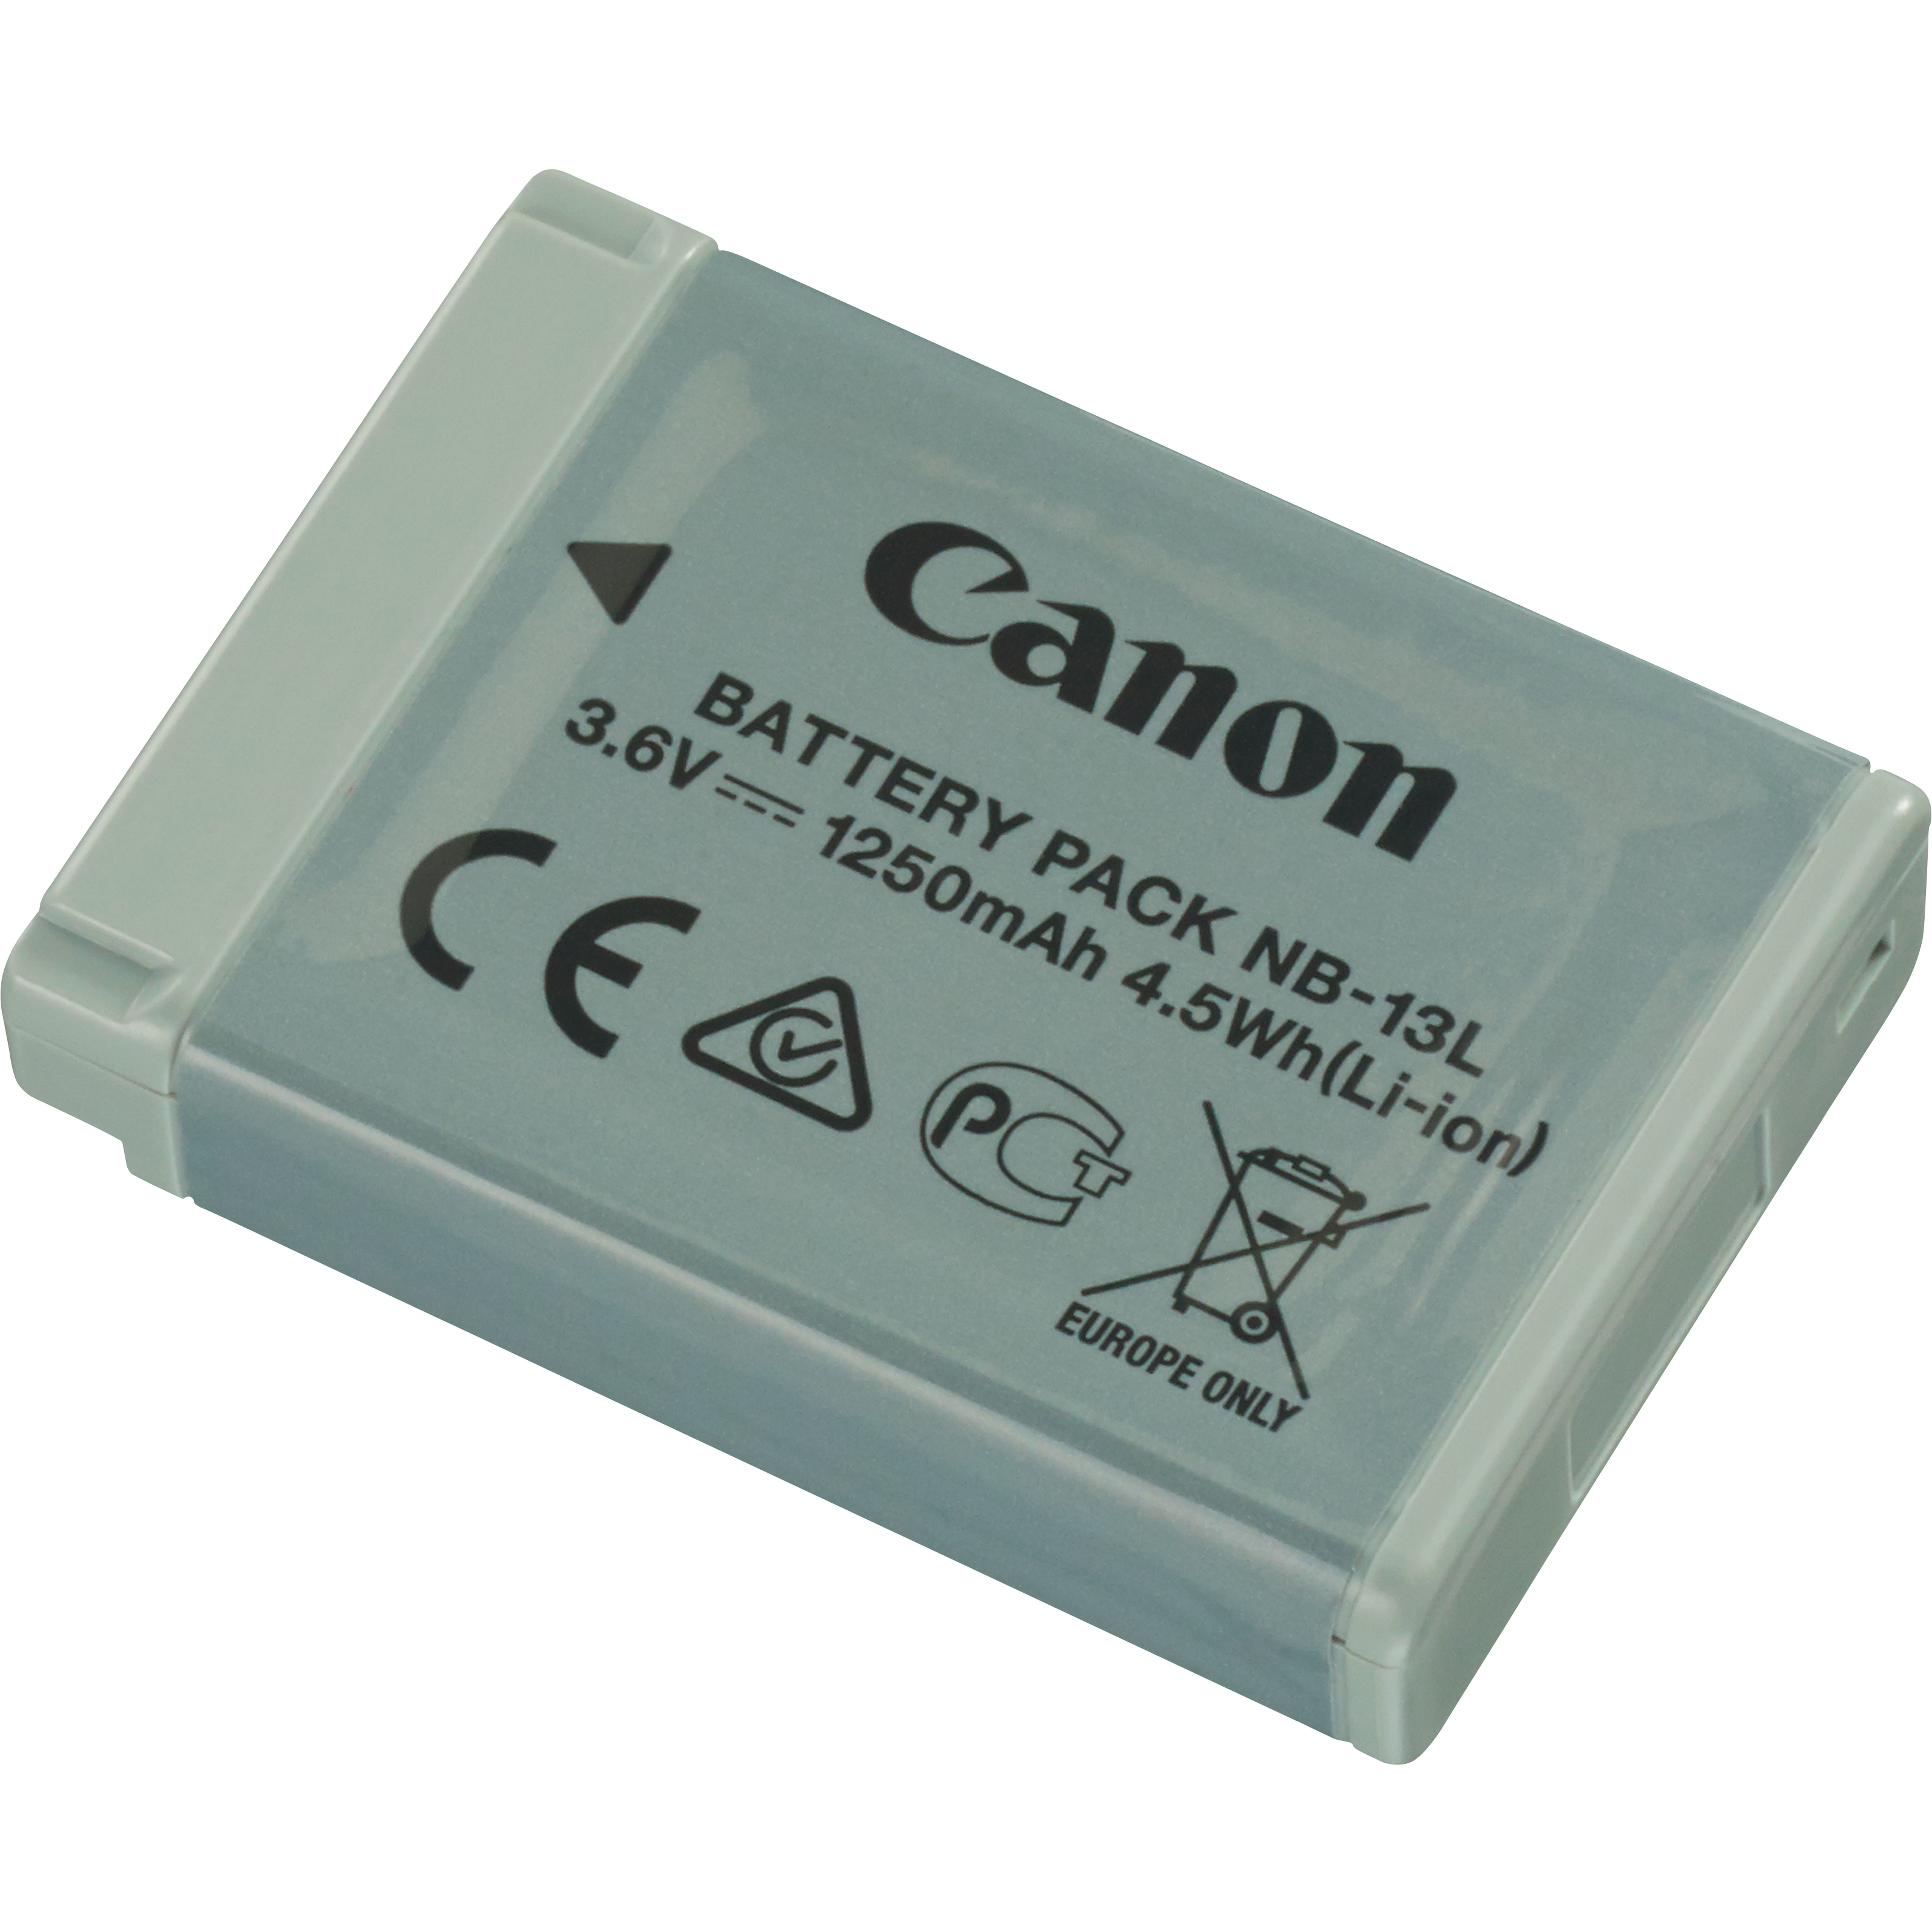 Canon Battery Pack NB-13L - Battery - Li-Ion - 1250 mAh - for PowerShot G1, G5, G7, G9, SX620, SX720, SX730, SX740